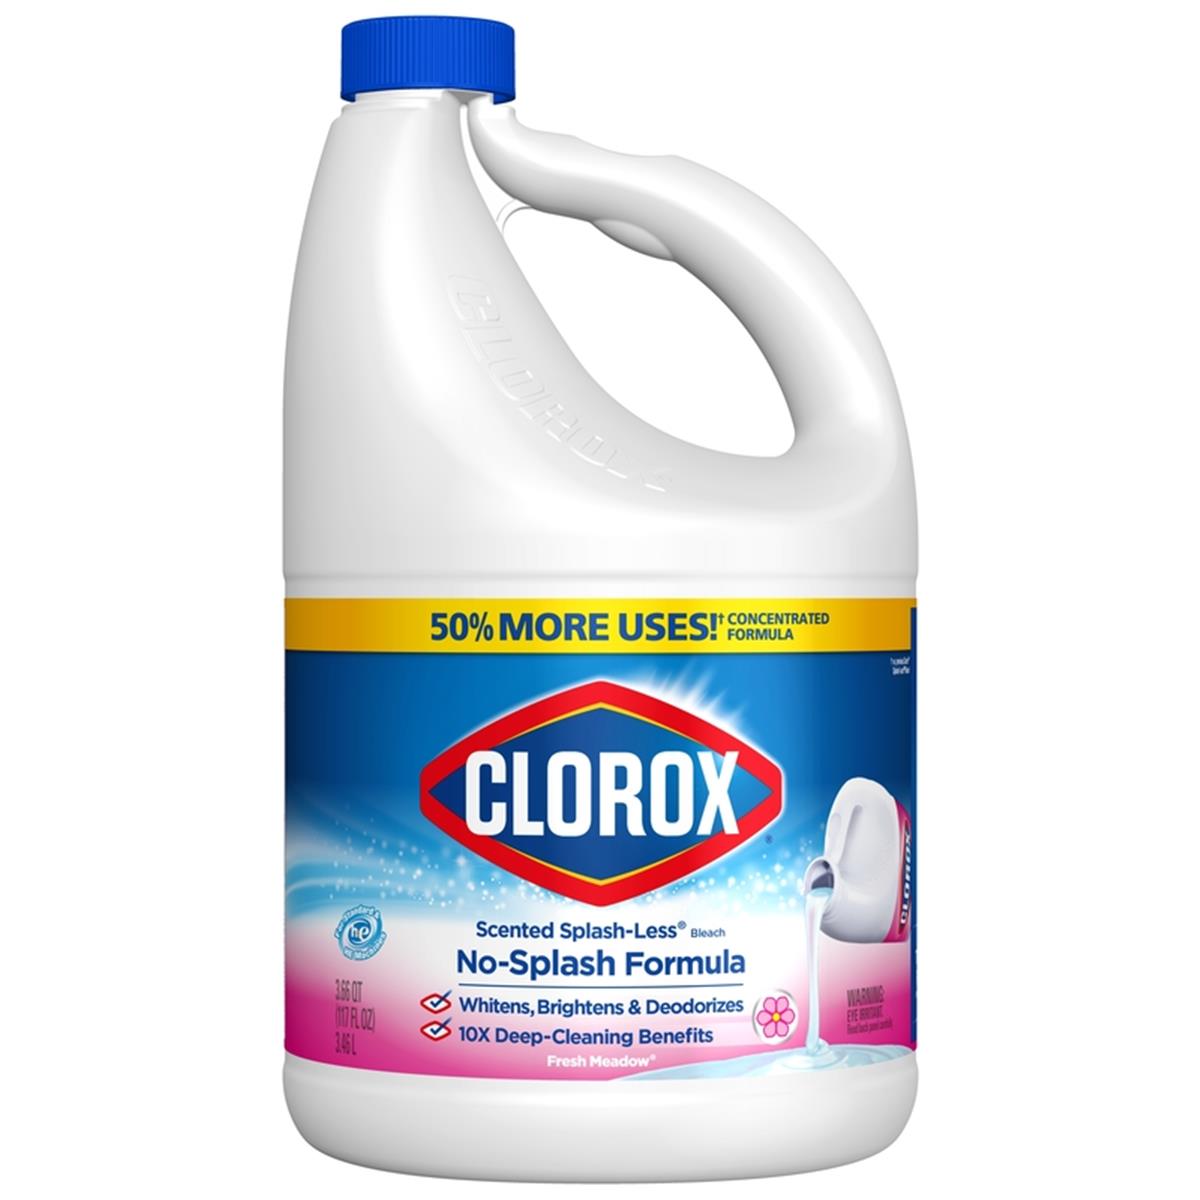 Clorox 1005781 117 oz Splash-Less Regular Scent Bleach - Pack of 3 -  The Clorox Company